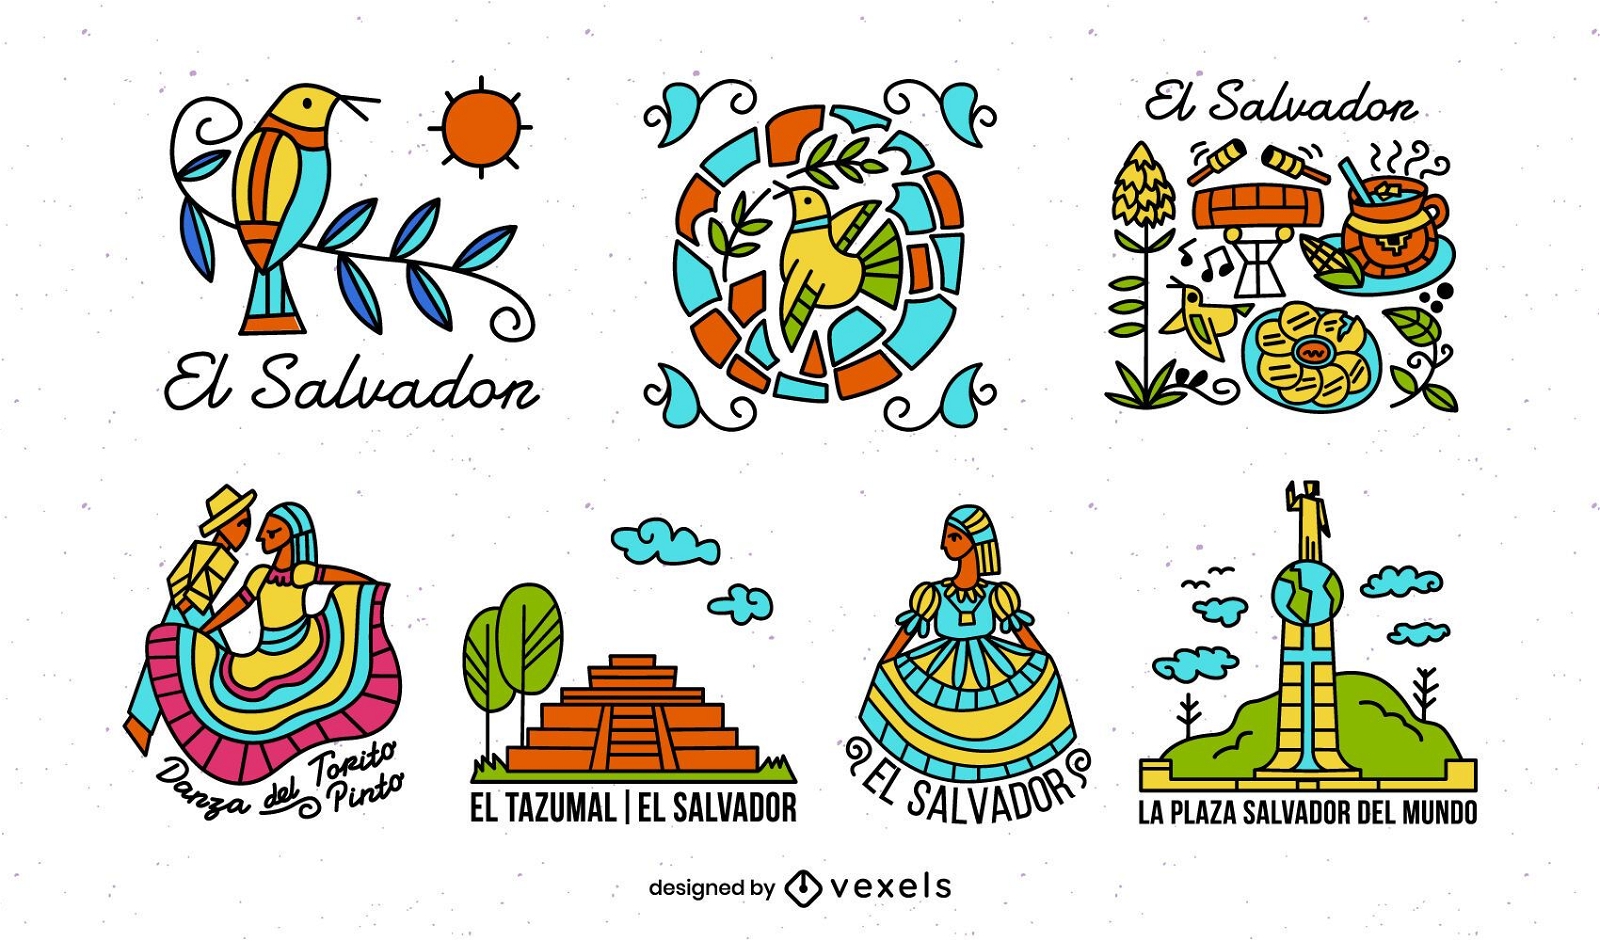 El Salvador Buntes illustriertes Elementpaket